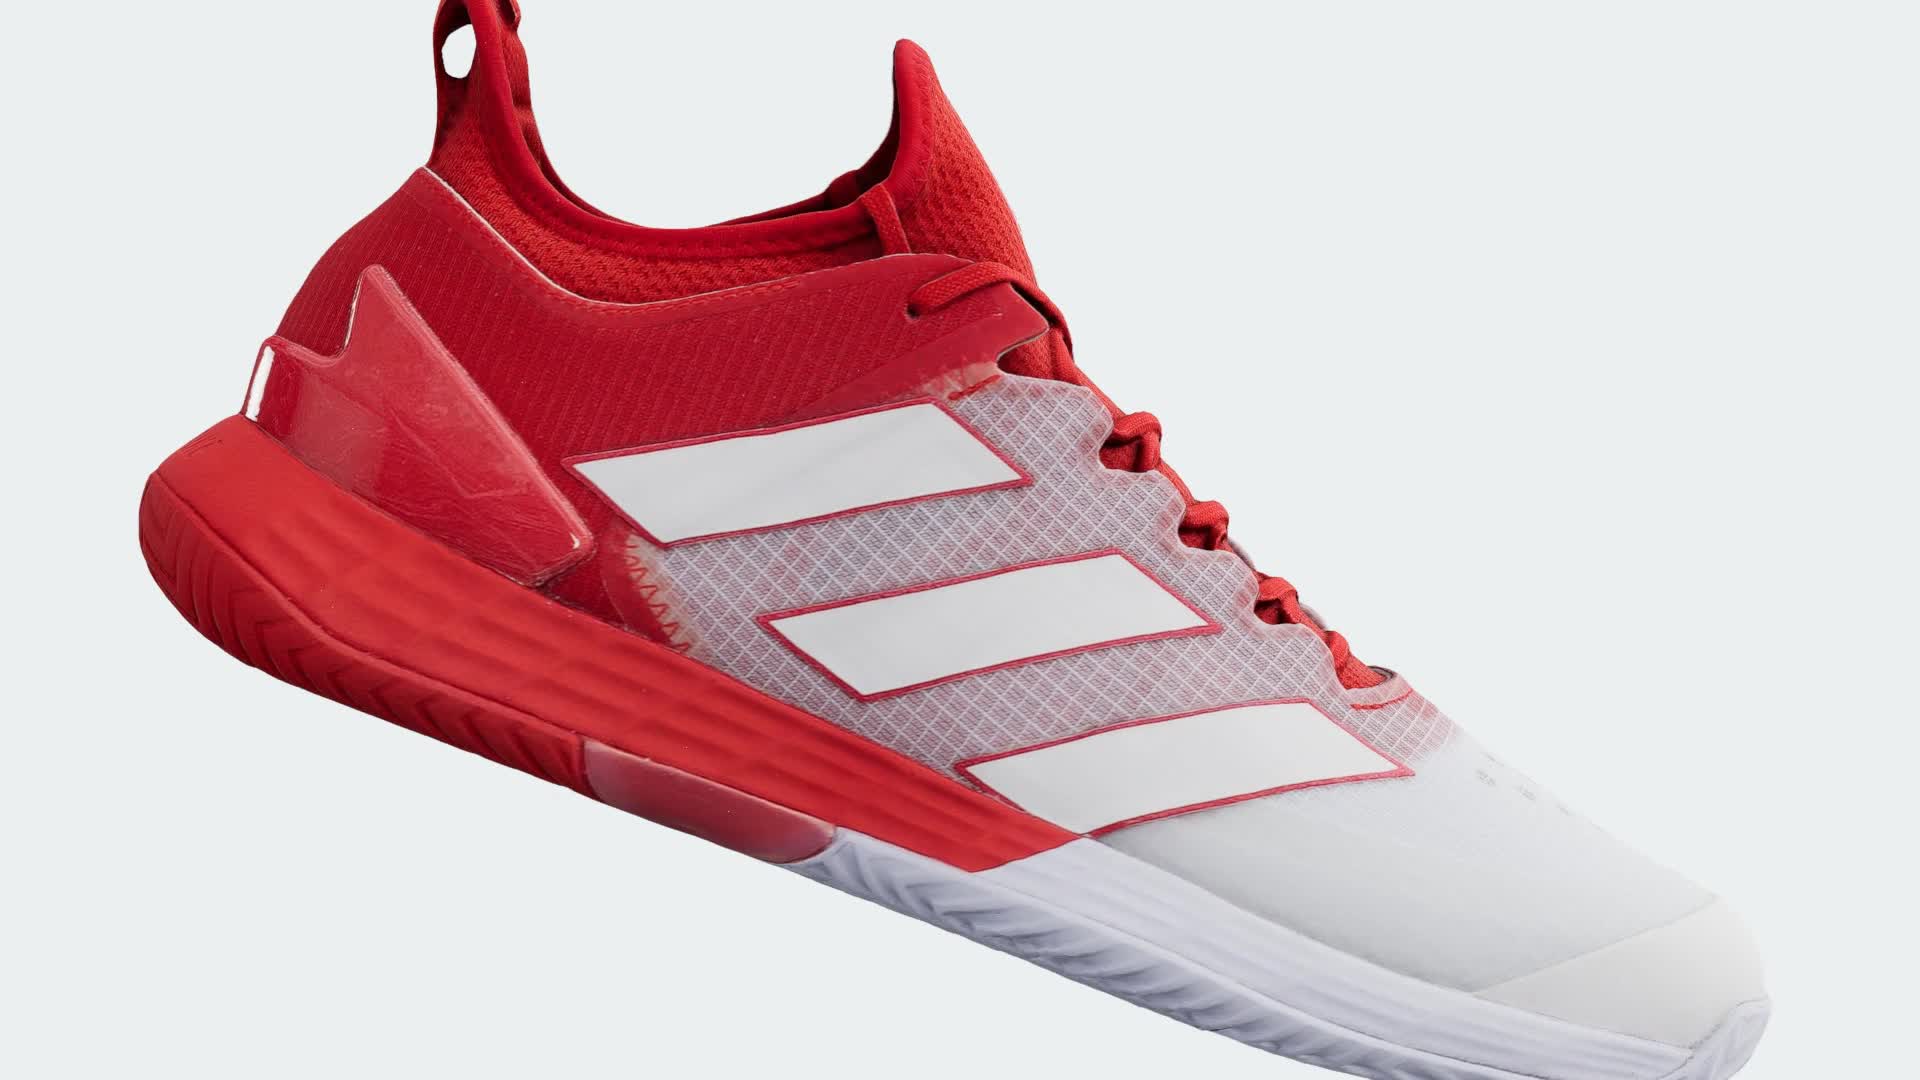 adidas Adizero Ubersonic 4 Tennis Shoes - Red | Men's Tennis 